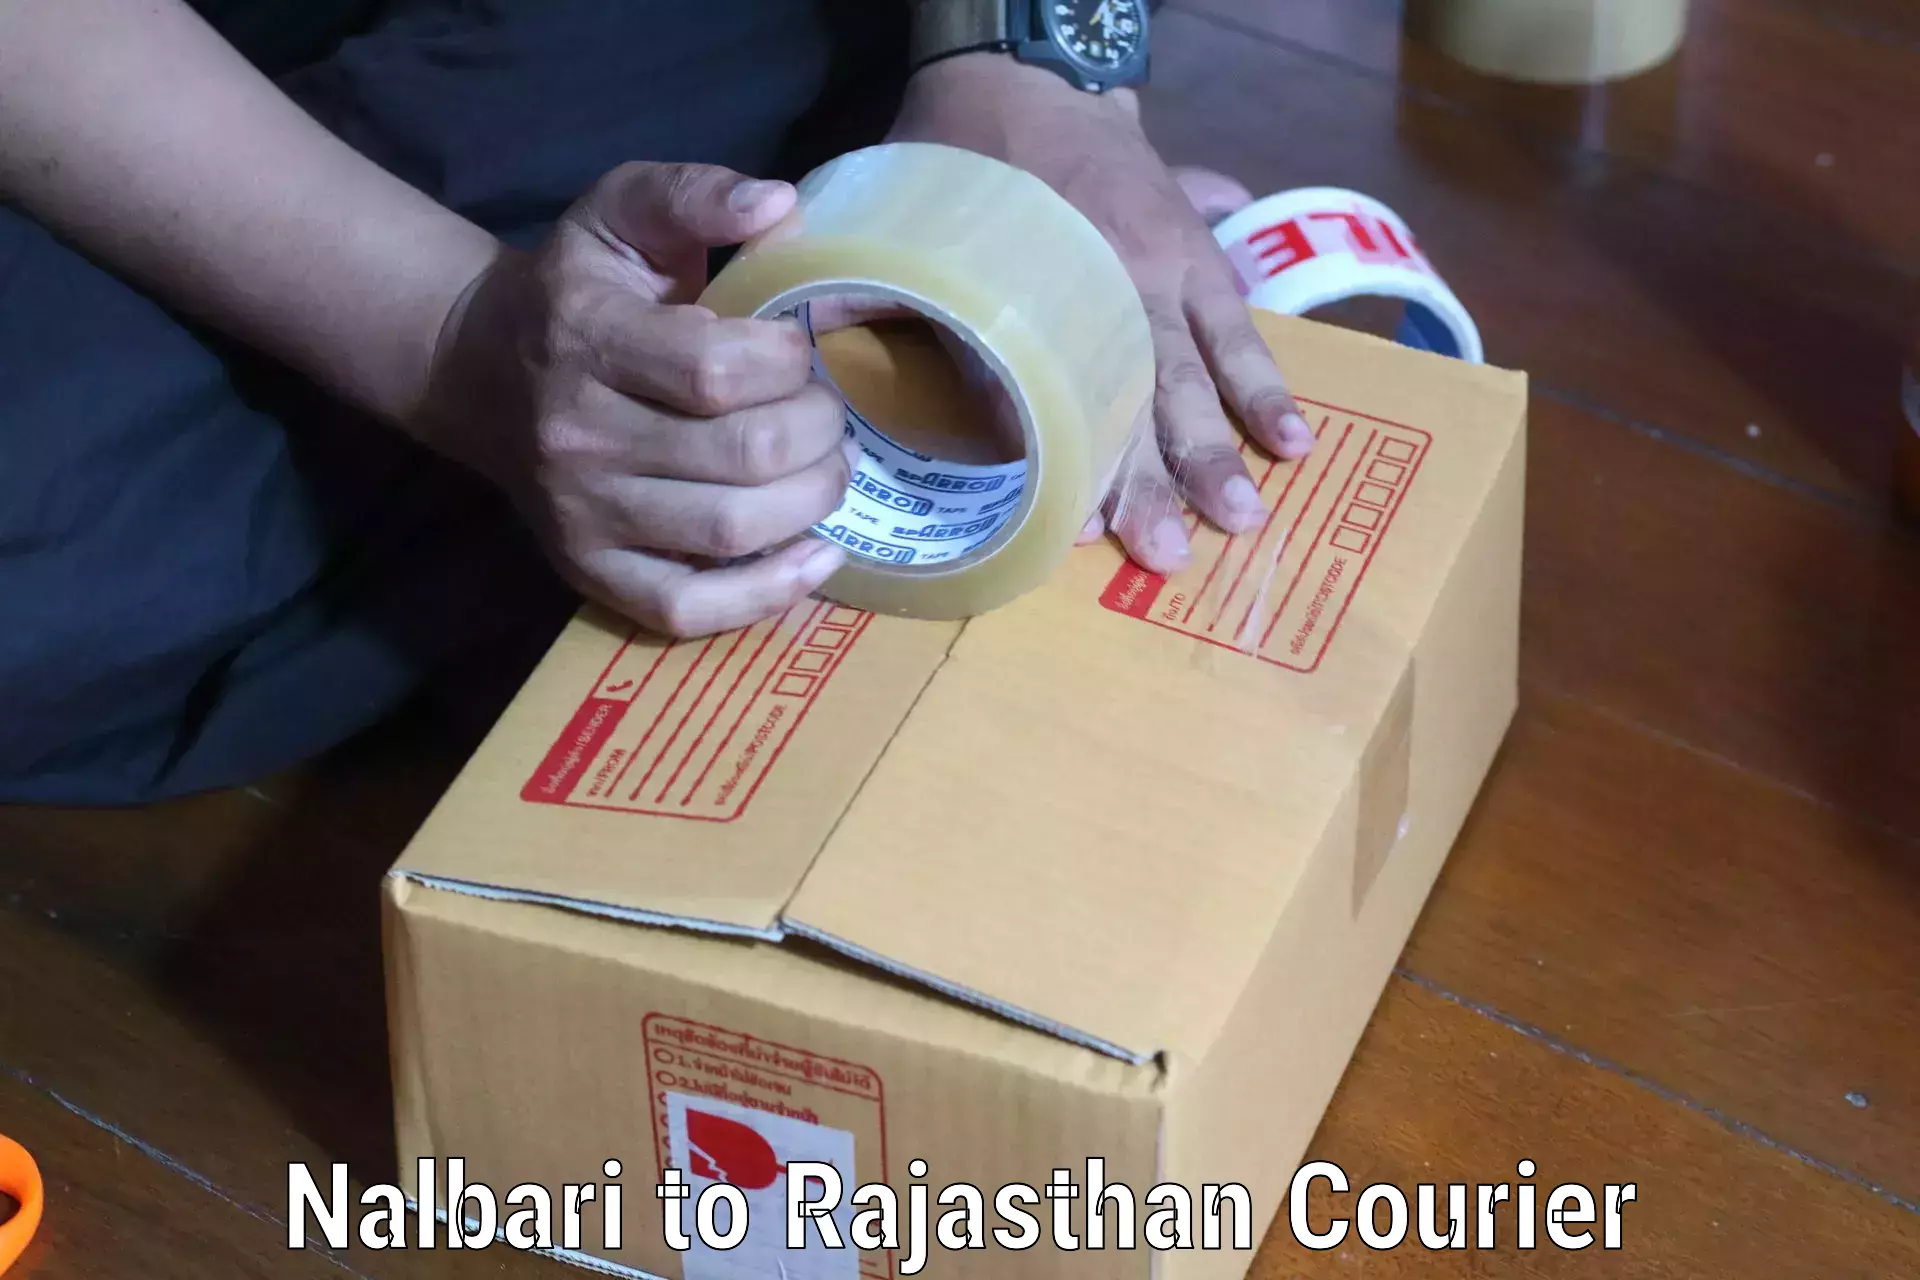 Secure shipping methods Nalbari to Parbatsar